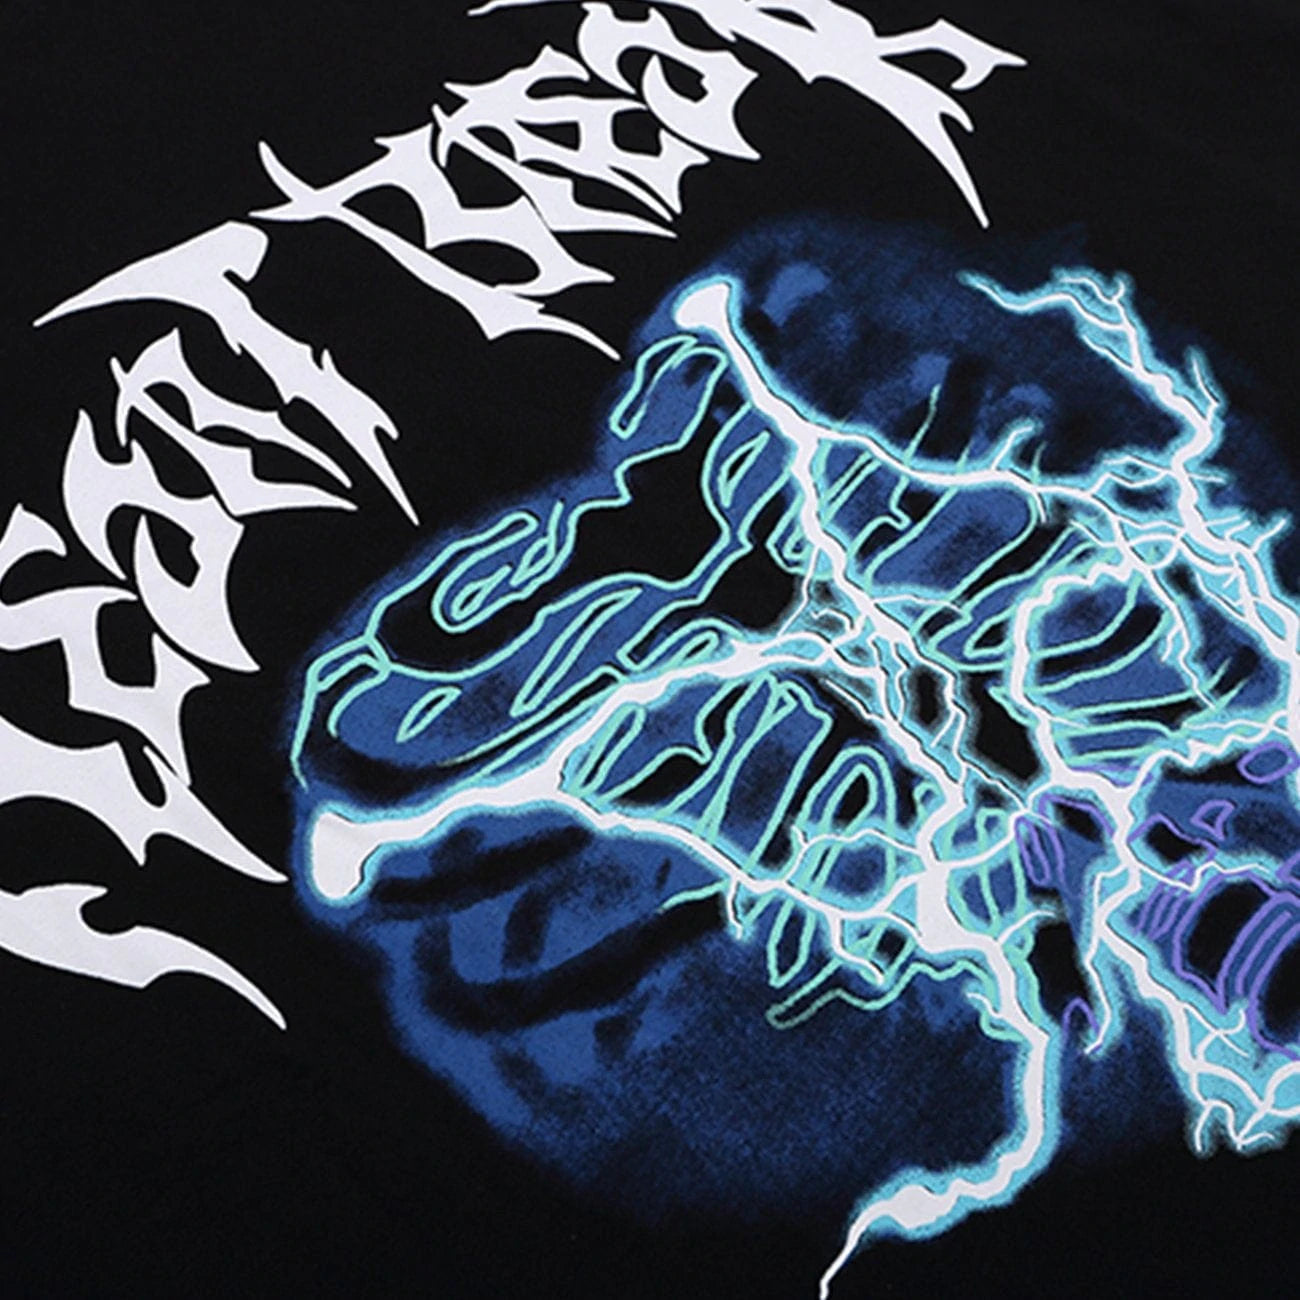 Lightning Skeleton Graphic T-Shirt